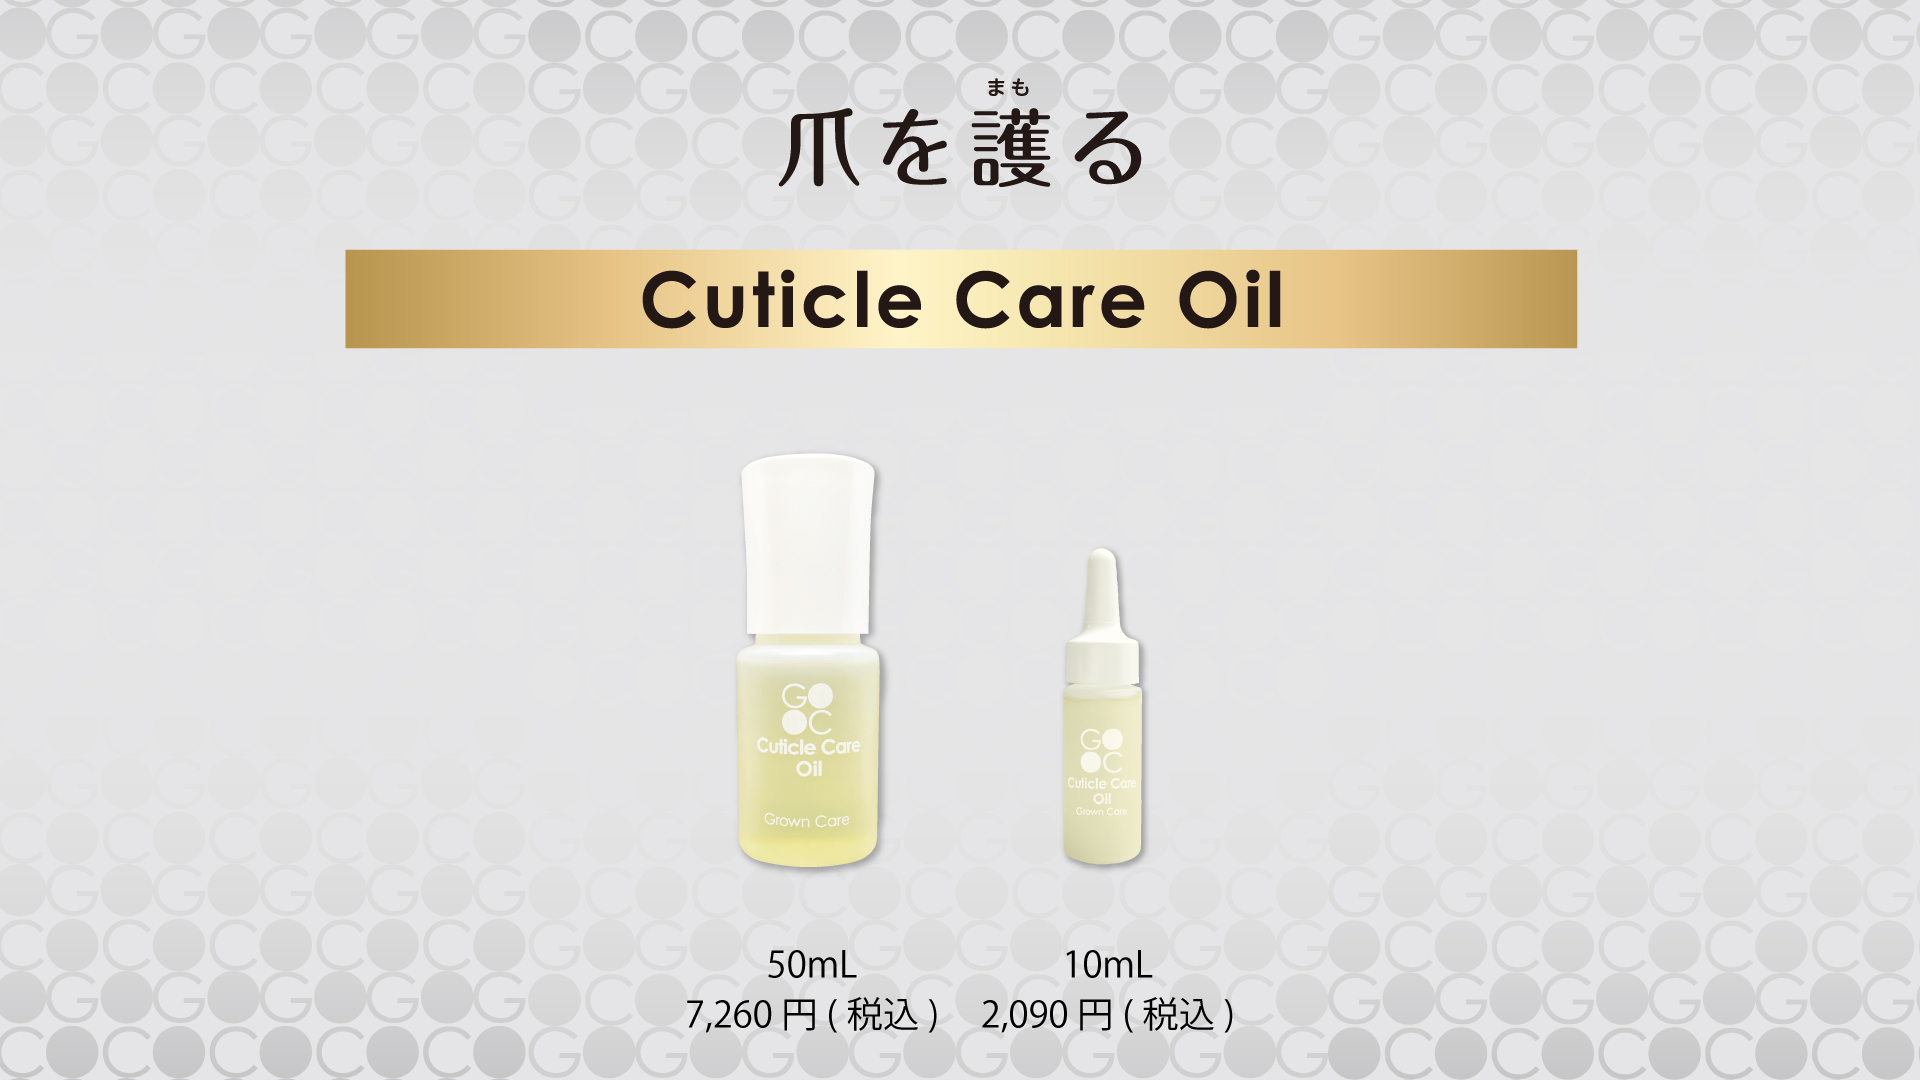 cuticle_care_oil | GROWN CARE